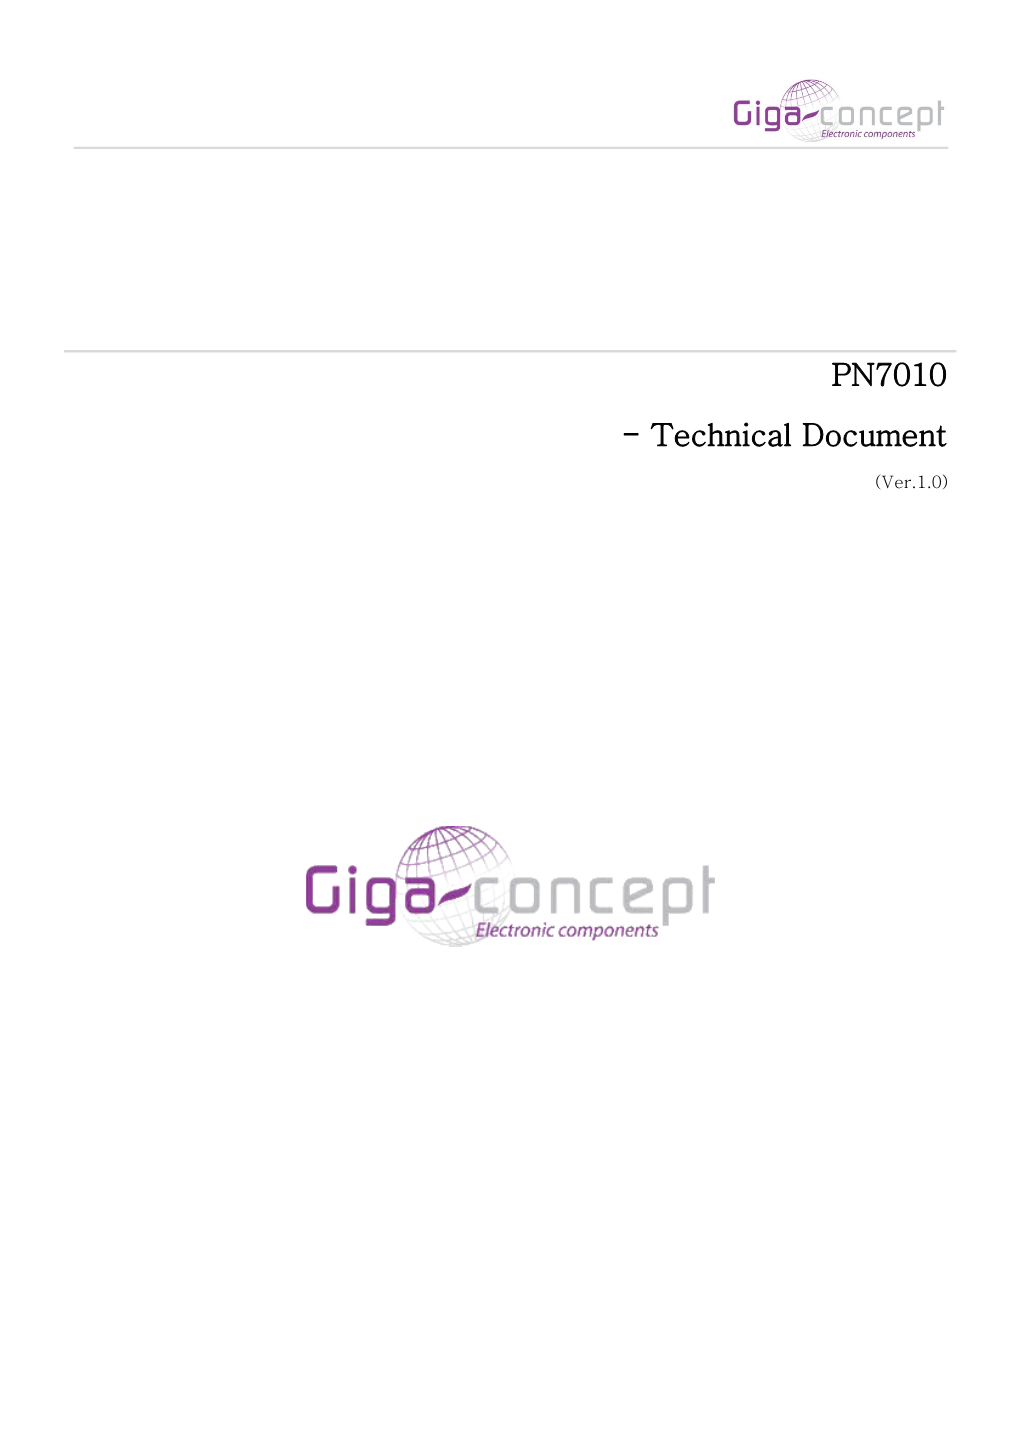 PN7010 - Technical Document (Ver.1.0)